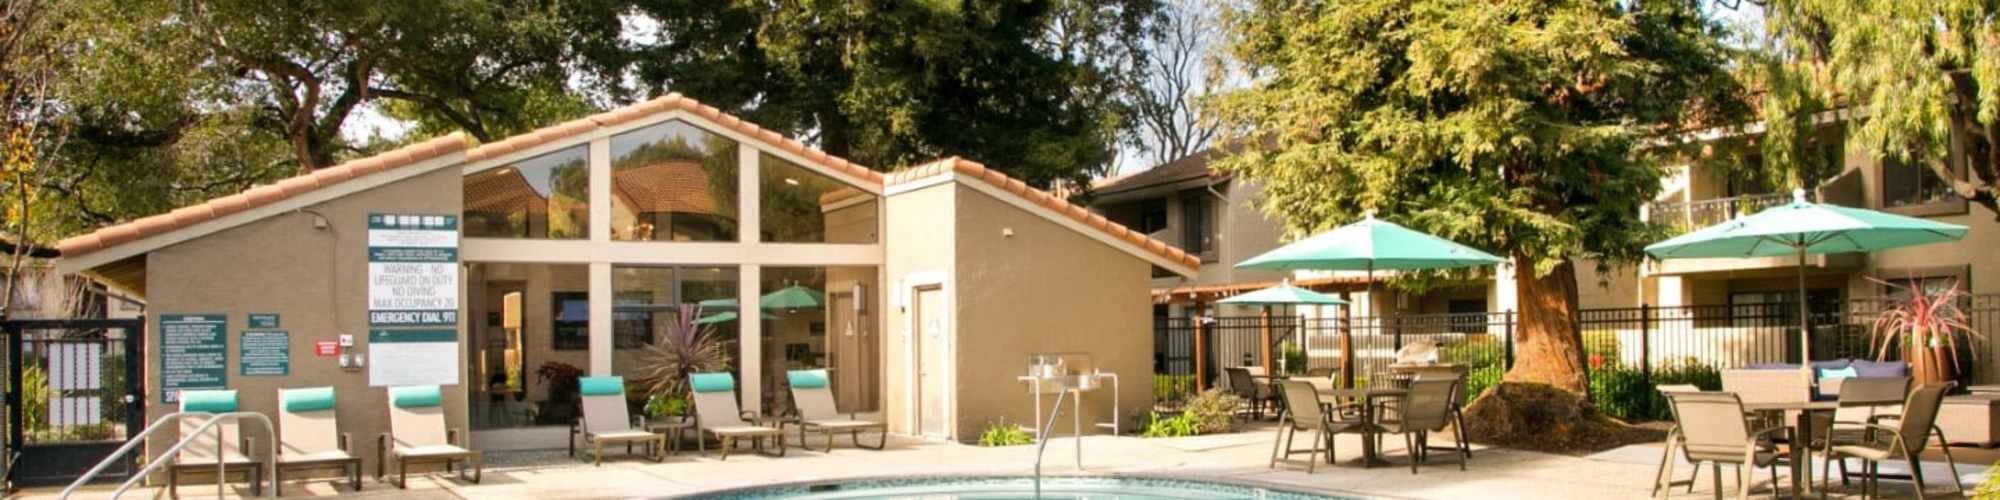 Photo Gallery | Villas Willow Glen in San Jose, California